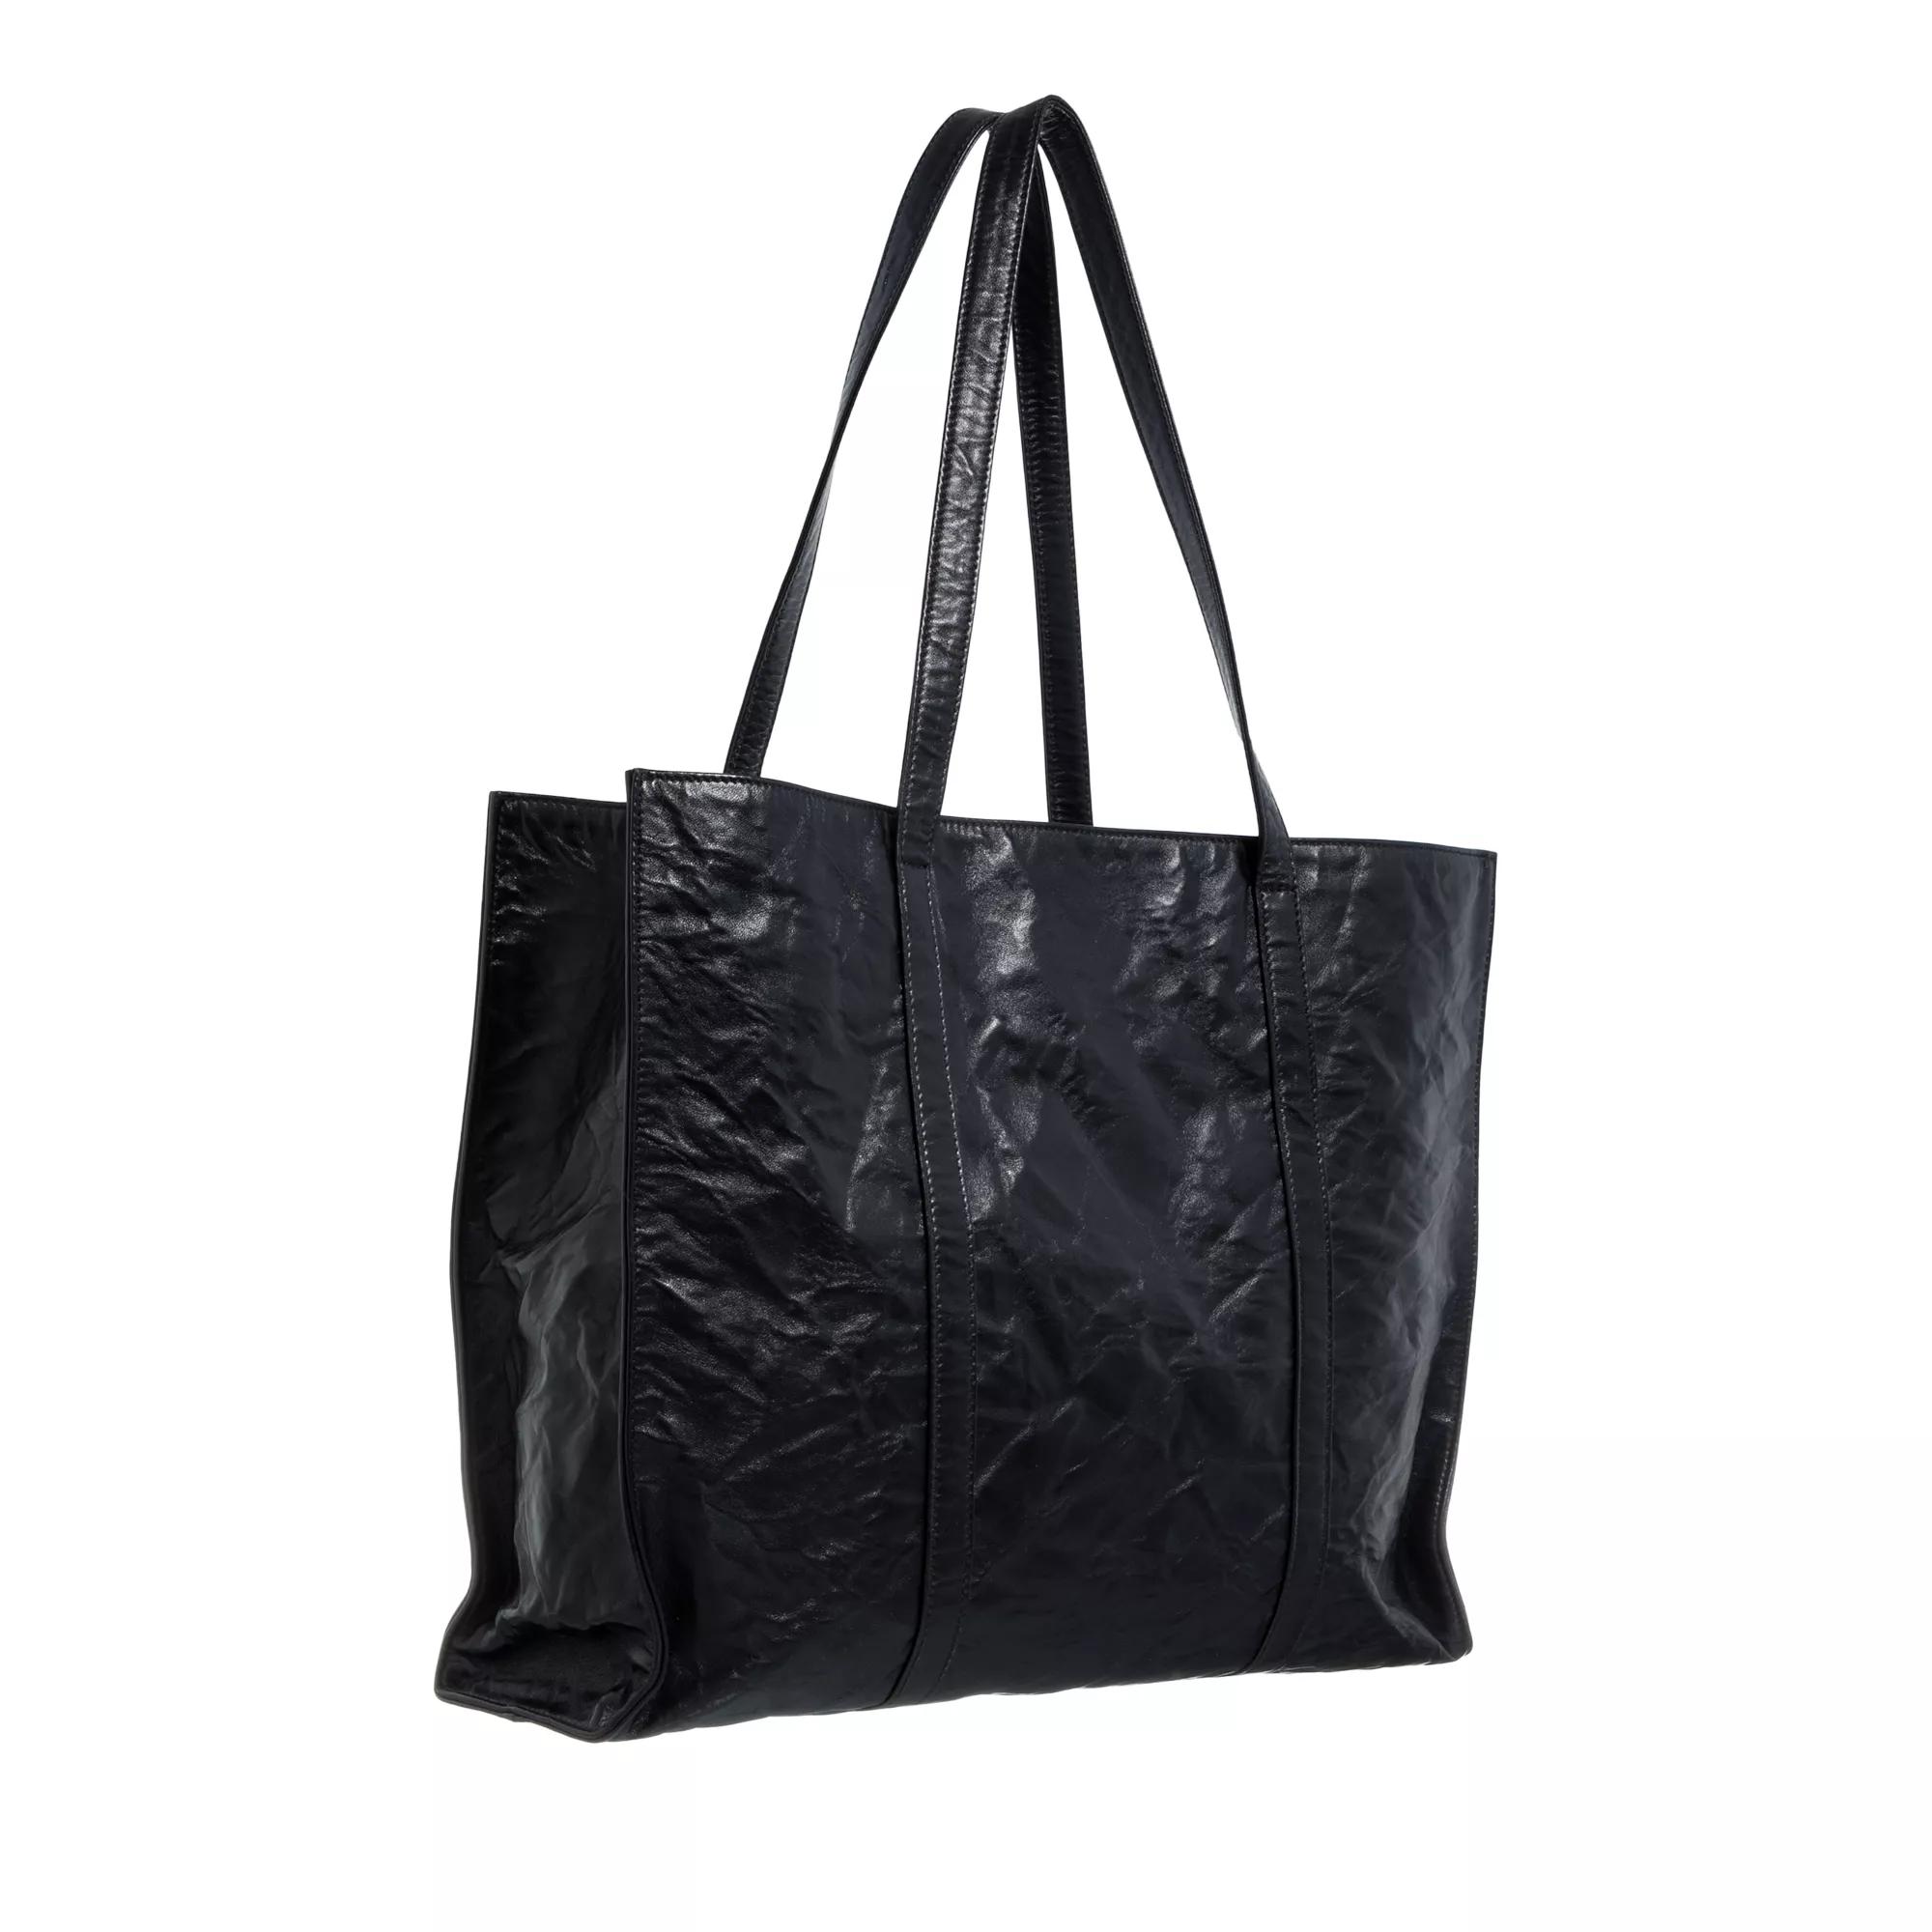 Prada Shoppers Antique Nappa Large Tote Bag in zwart